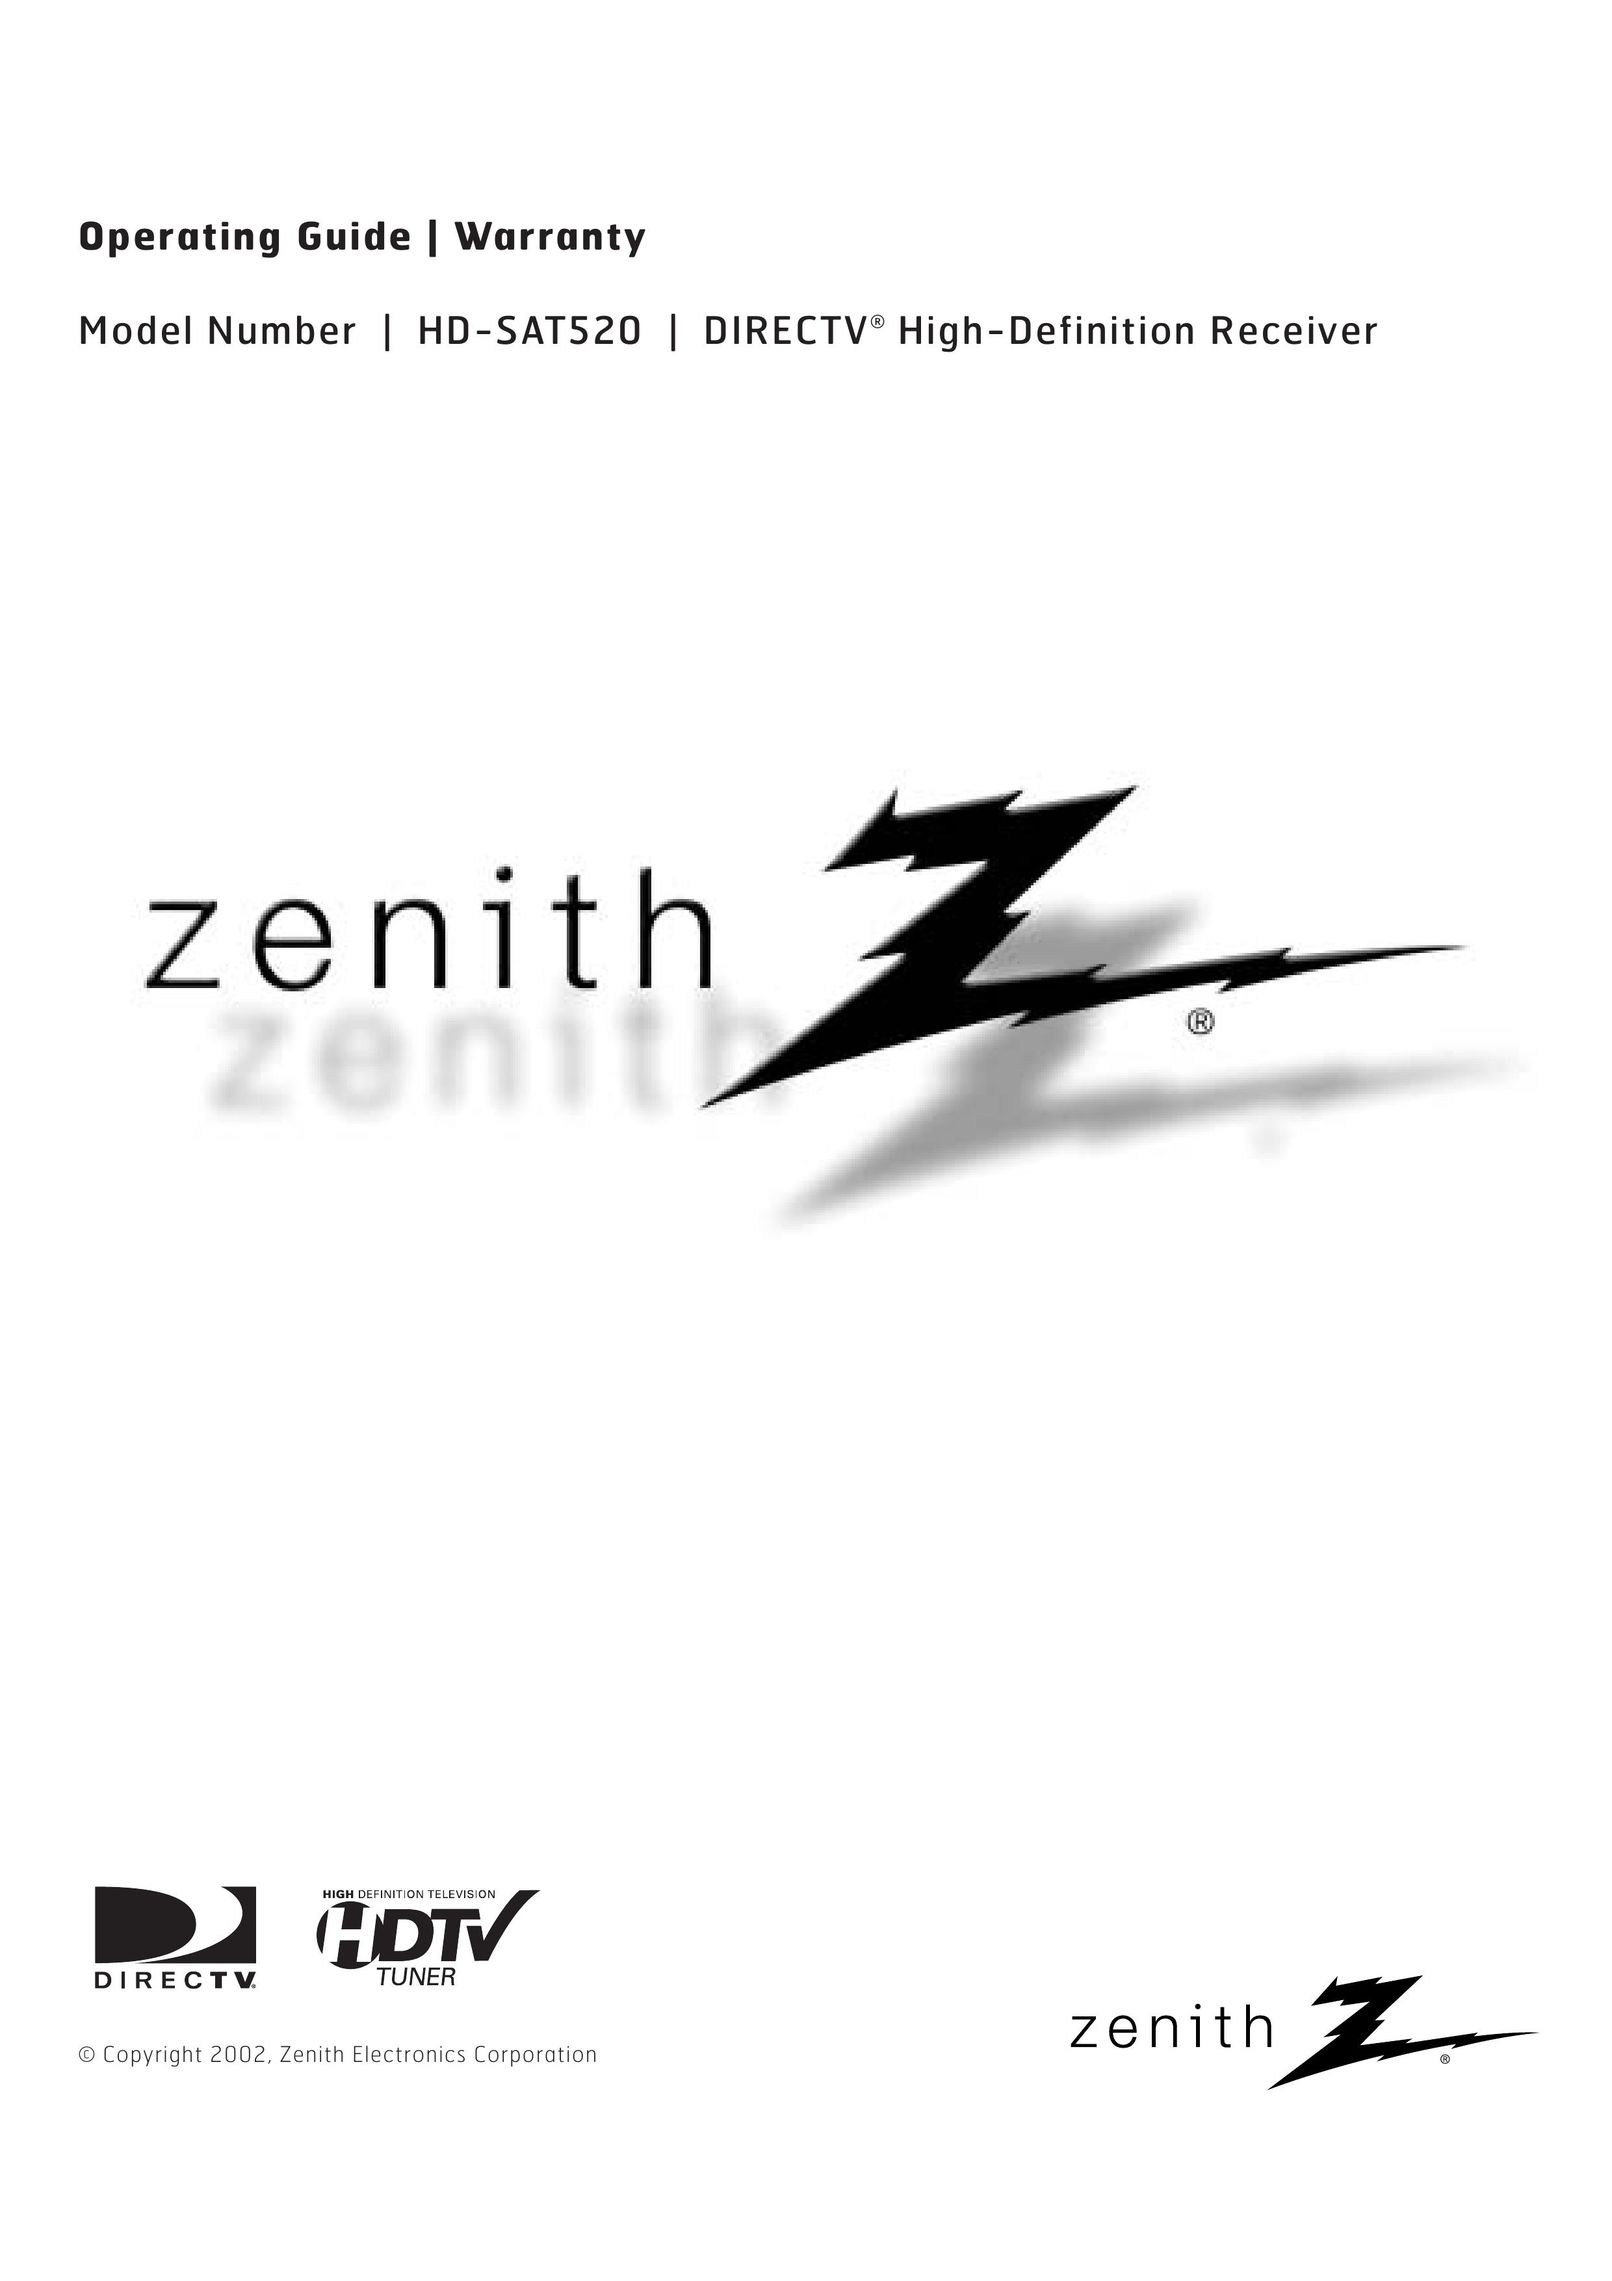 Zenith HD-SAT520 Satellite TV System User Manual